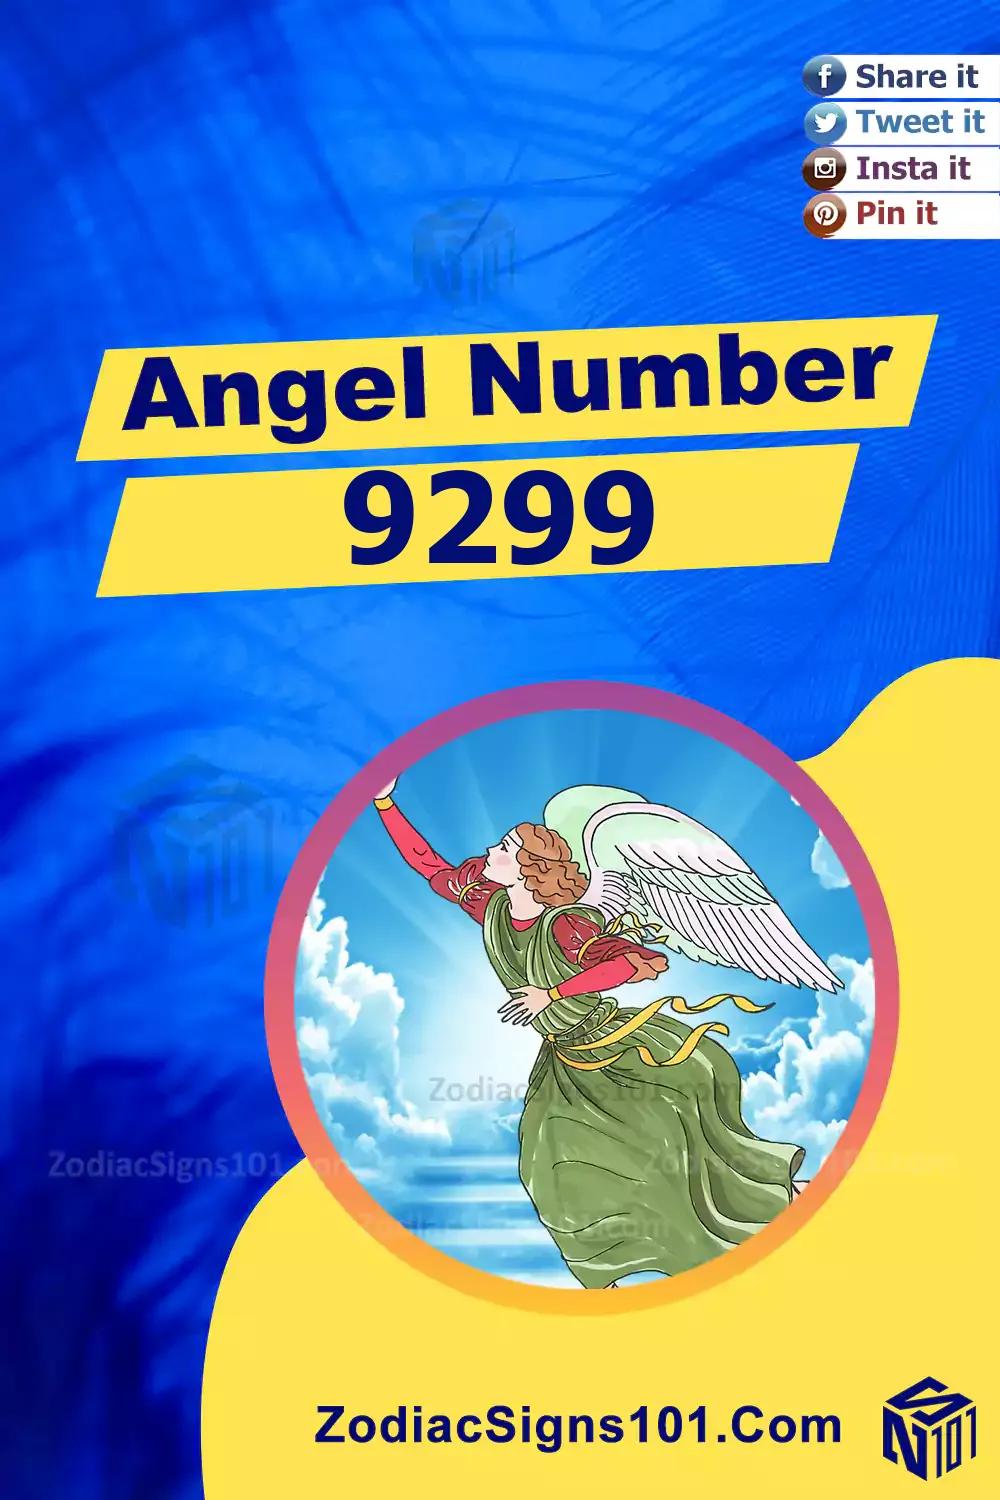 9299-Angel-Number-Meaning.jpg